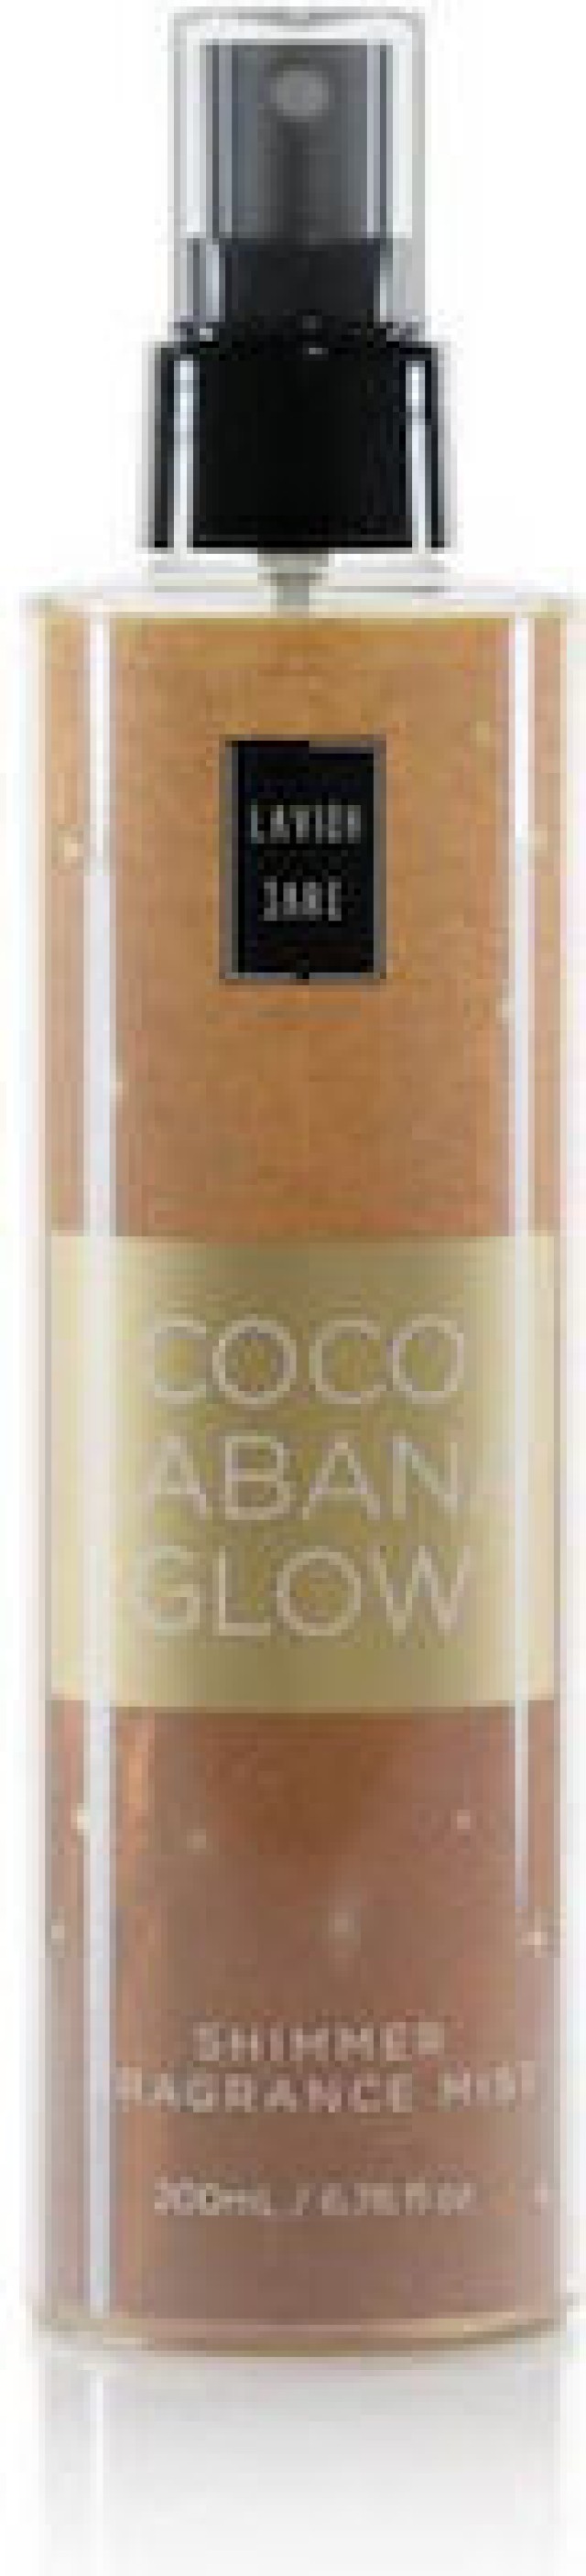 Lavish Care Coco Cabana Glow Shimmer Γυναικείο Body Mist με Σύνθεση Glitter 200ml